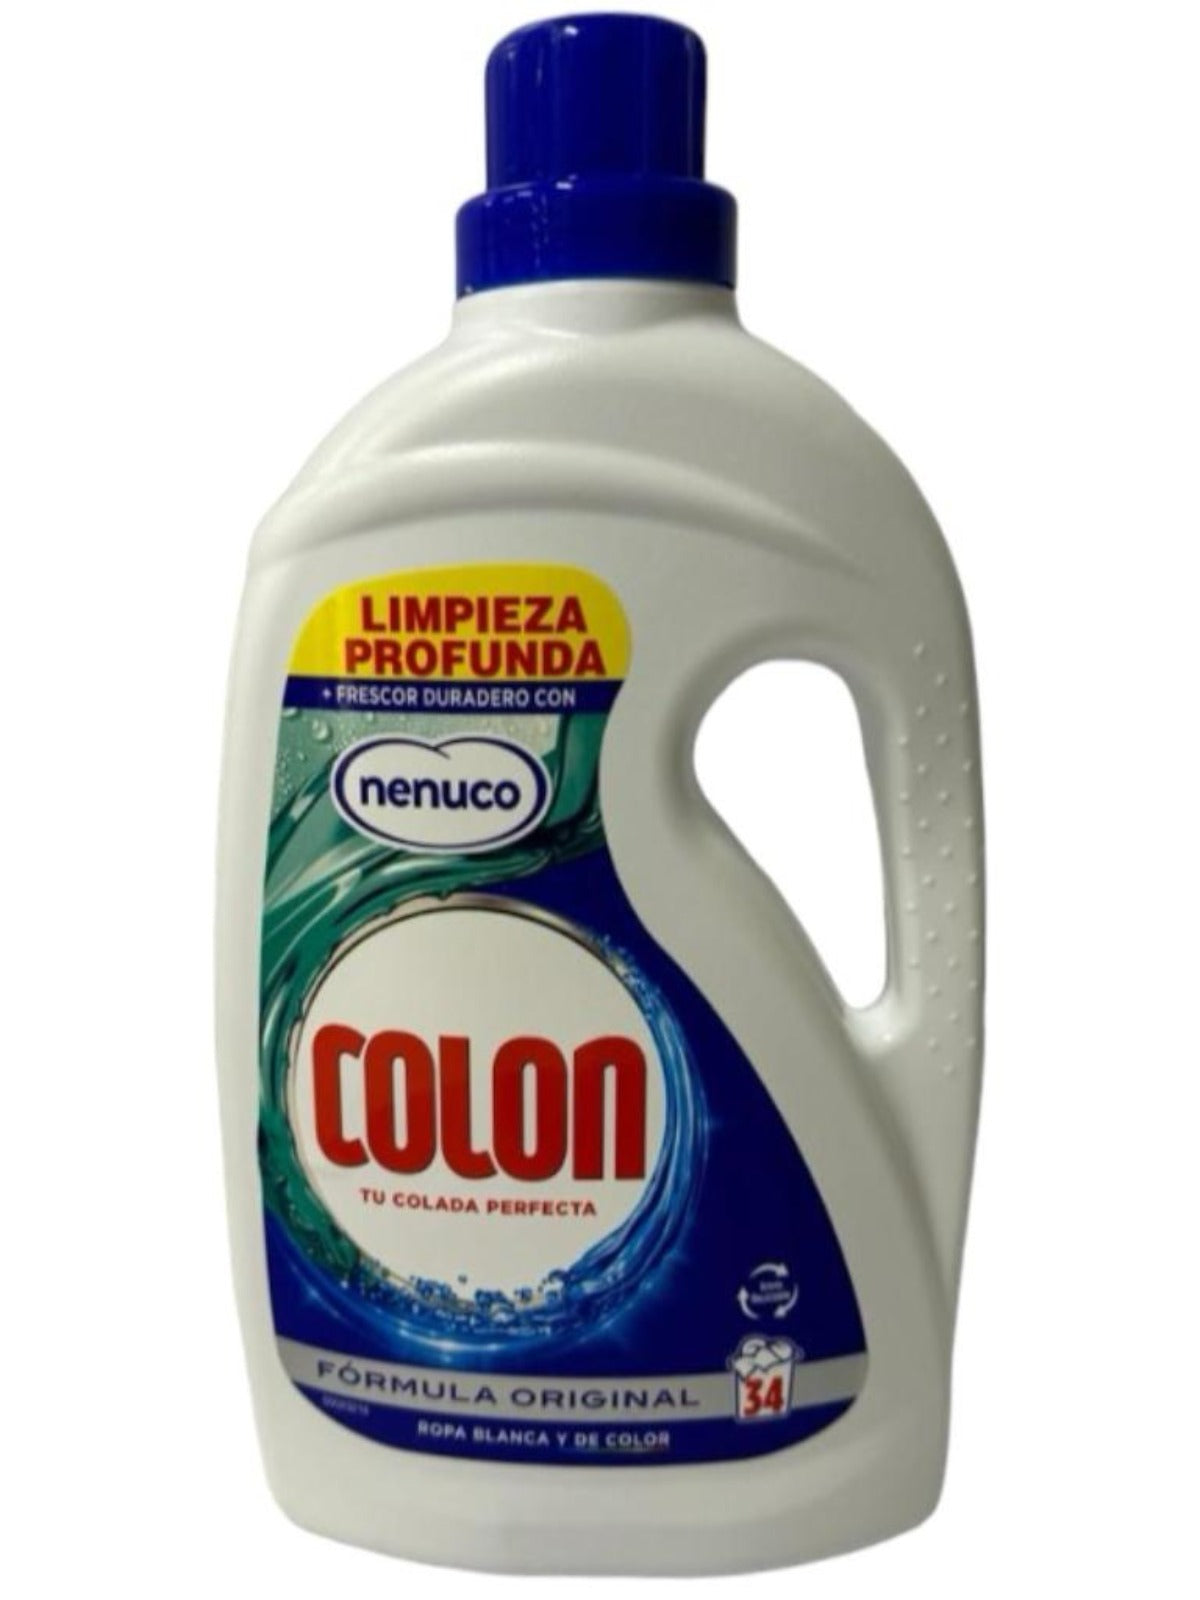 Nenuco Colon Laundry Liquid 1.7L